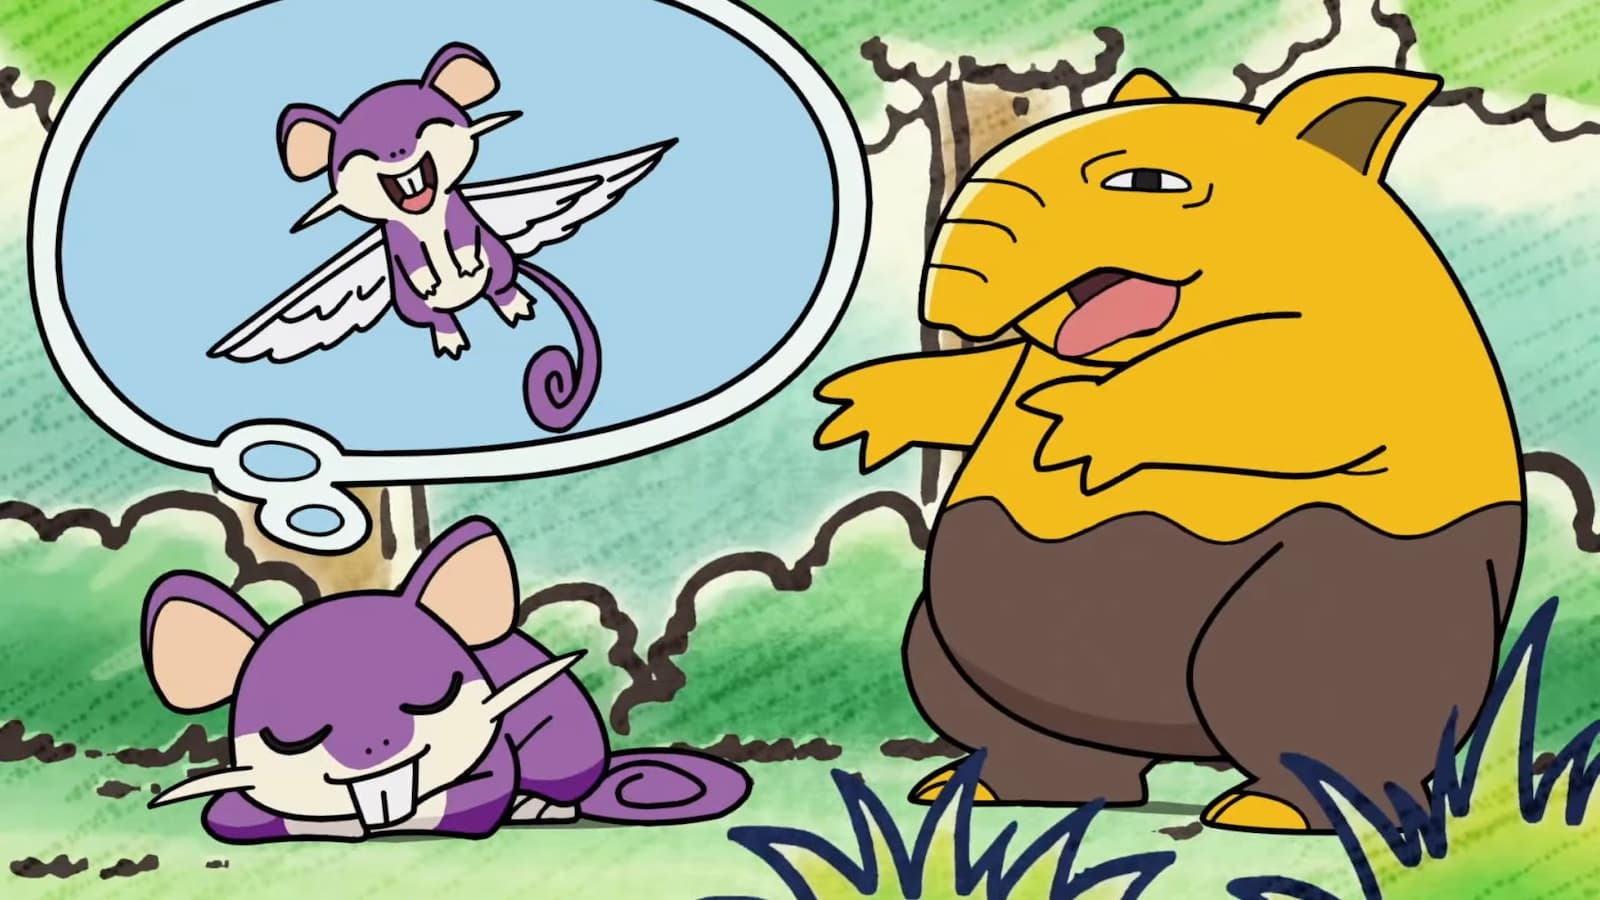 Drowzee eating Rattata dreams in the Pokemon Journeys anime